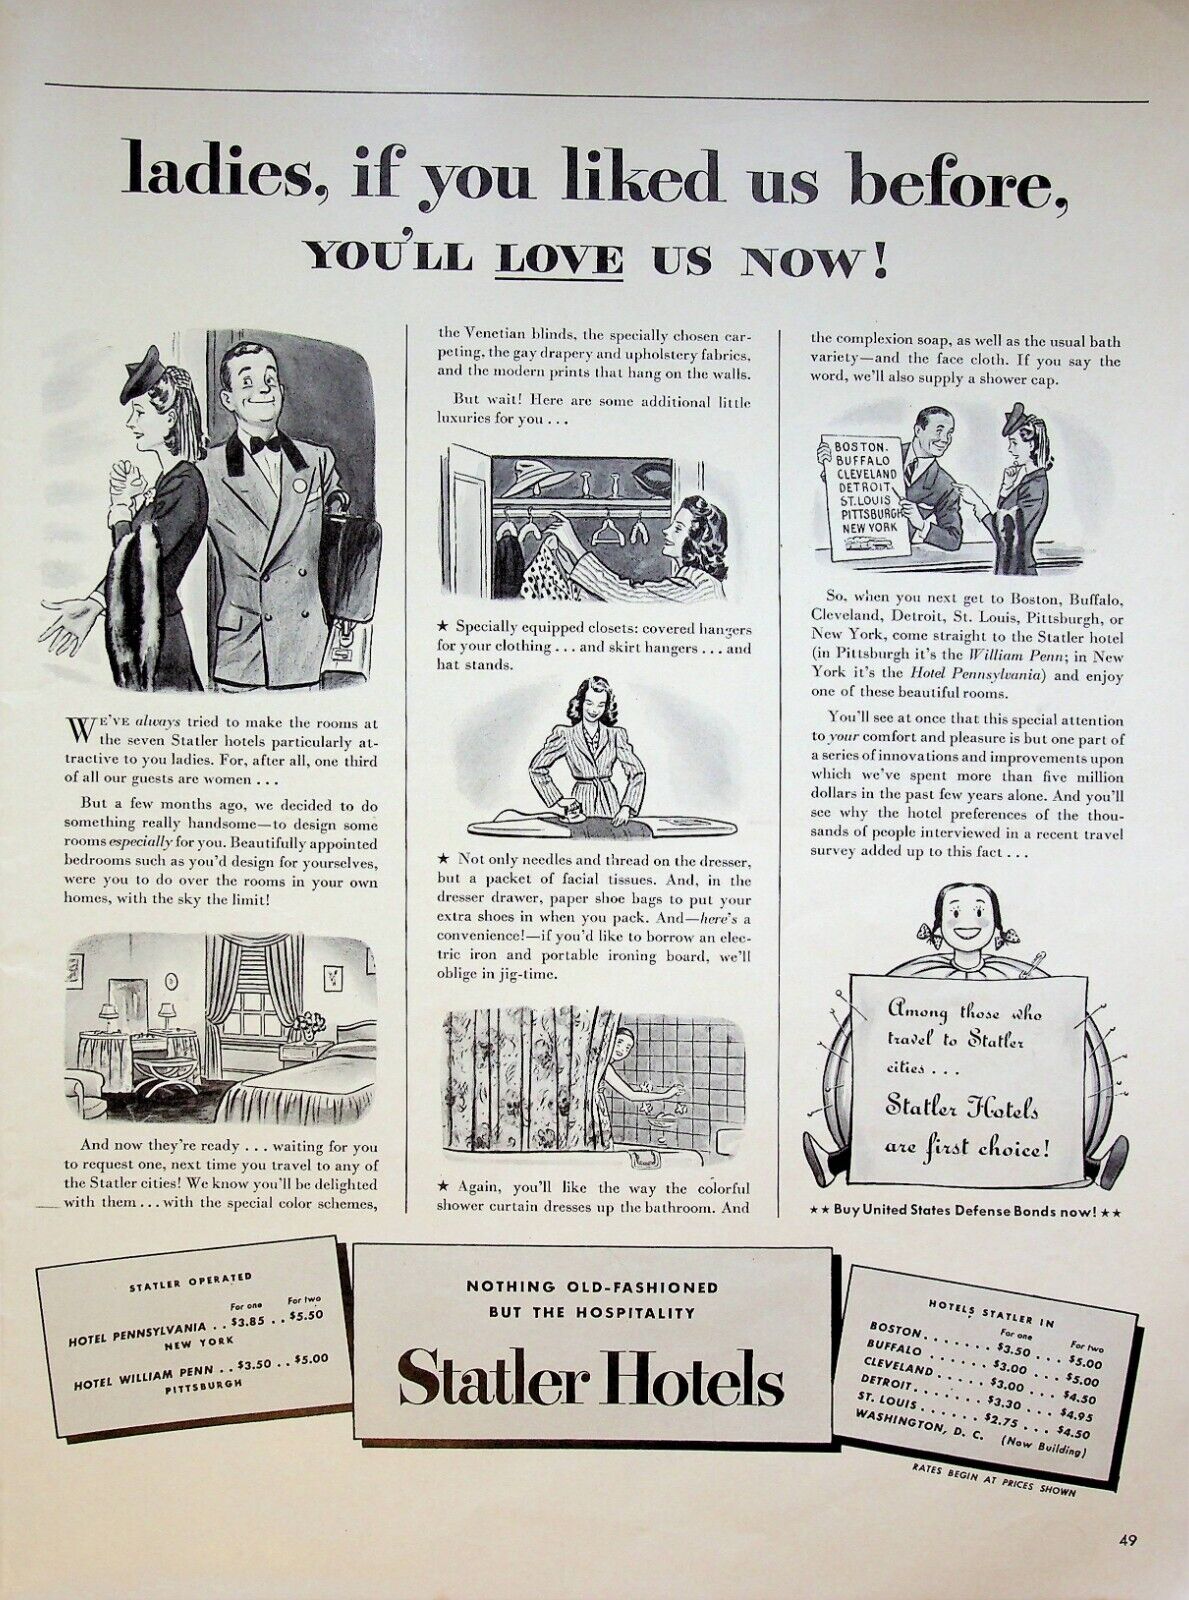 1941 Statler Hotels Vintage Print Ad 1940s WW2 ERA Old-Fashioned Hospitality